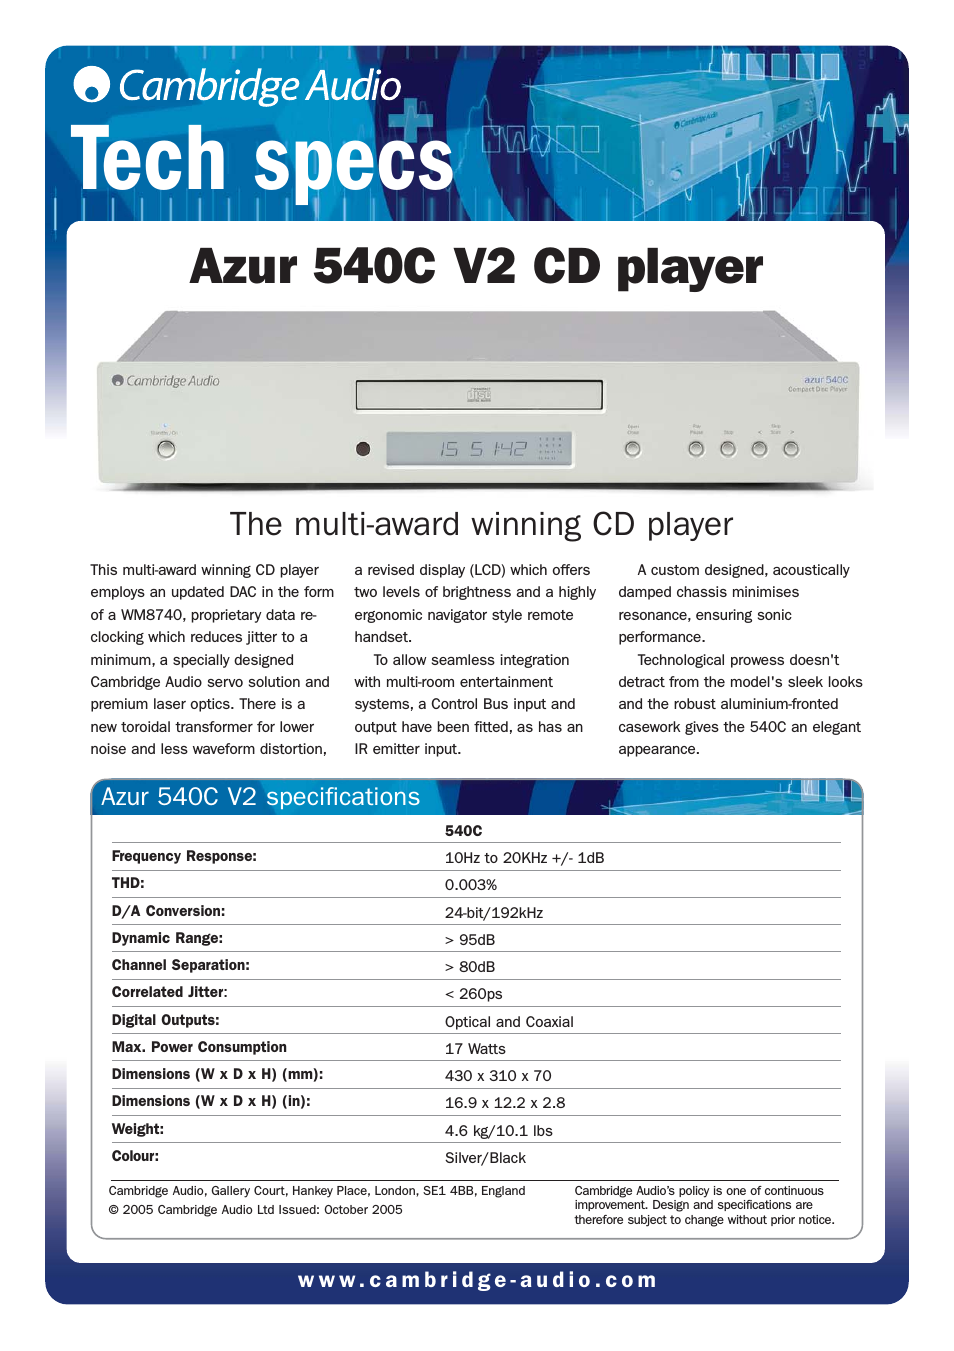 azur 540C V2